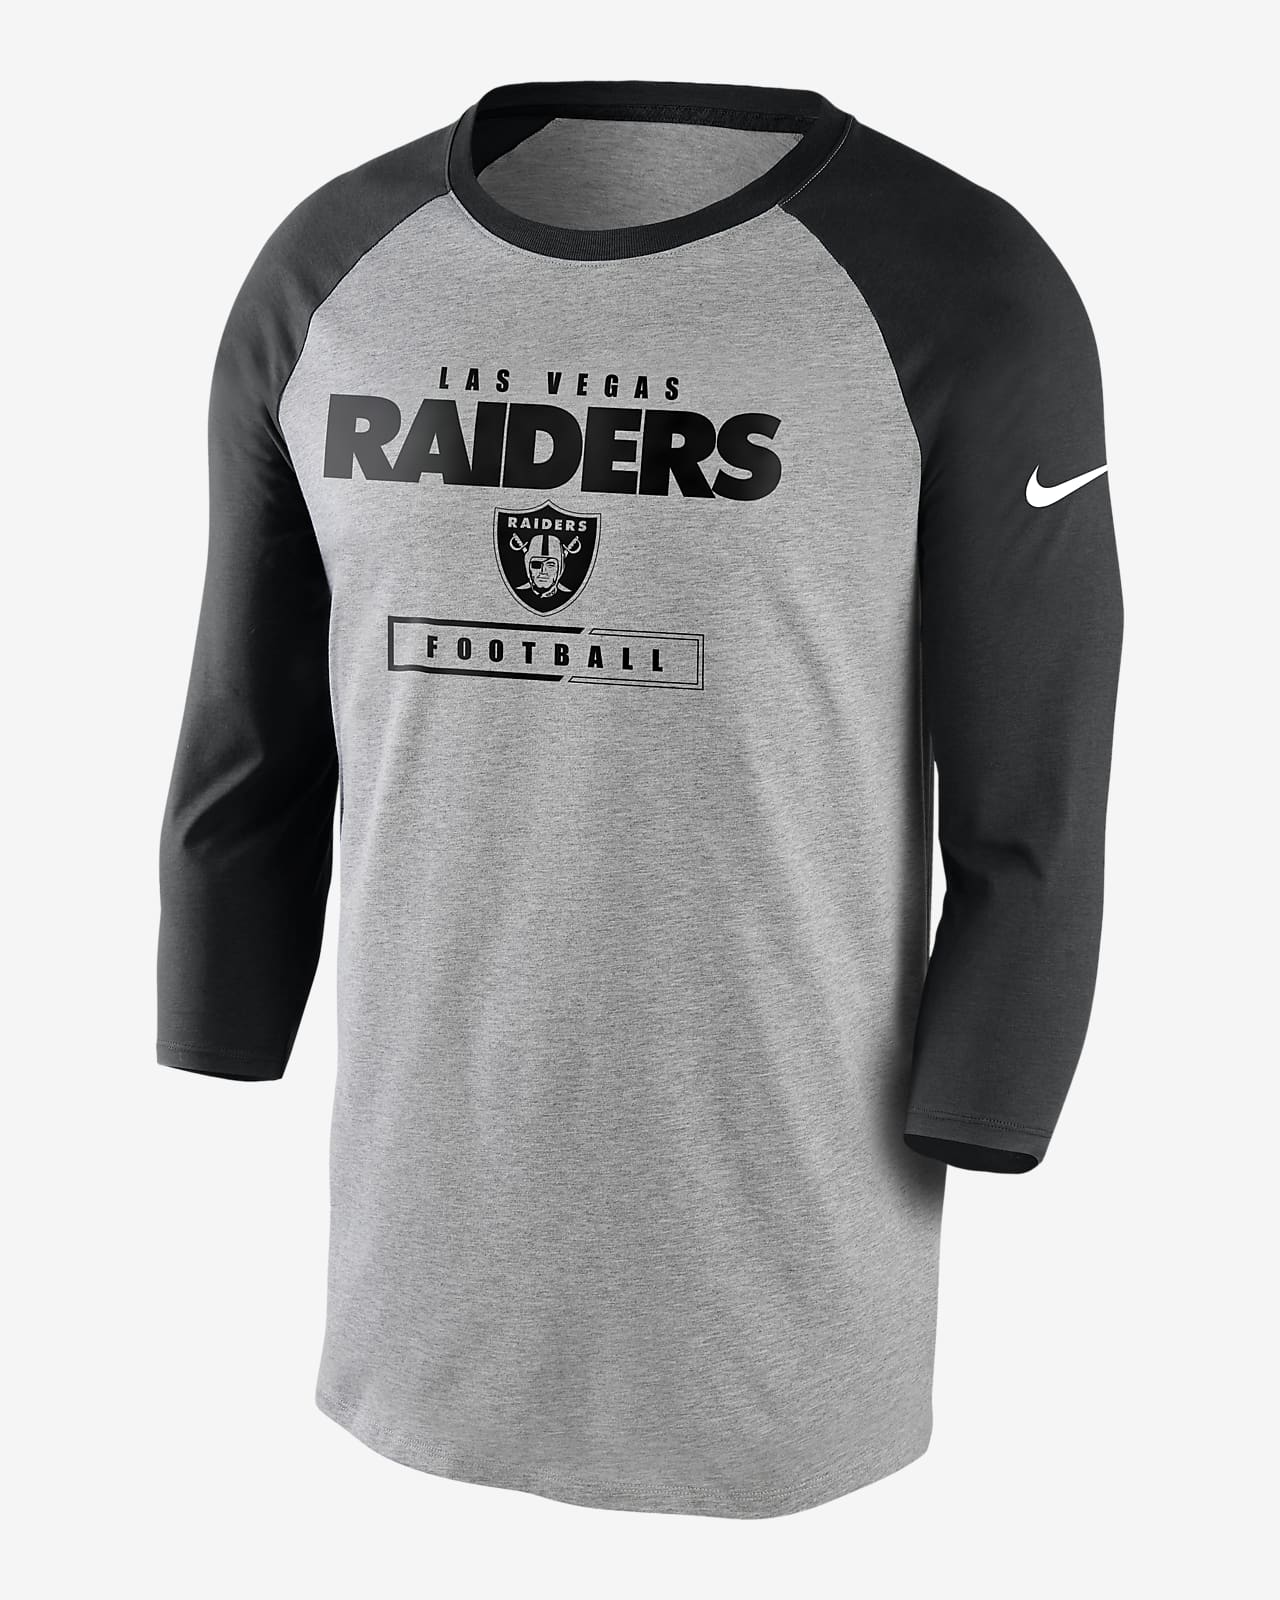 raiders jersey 4